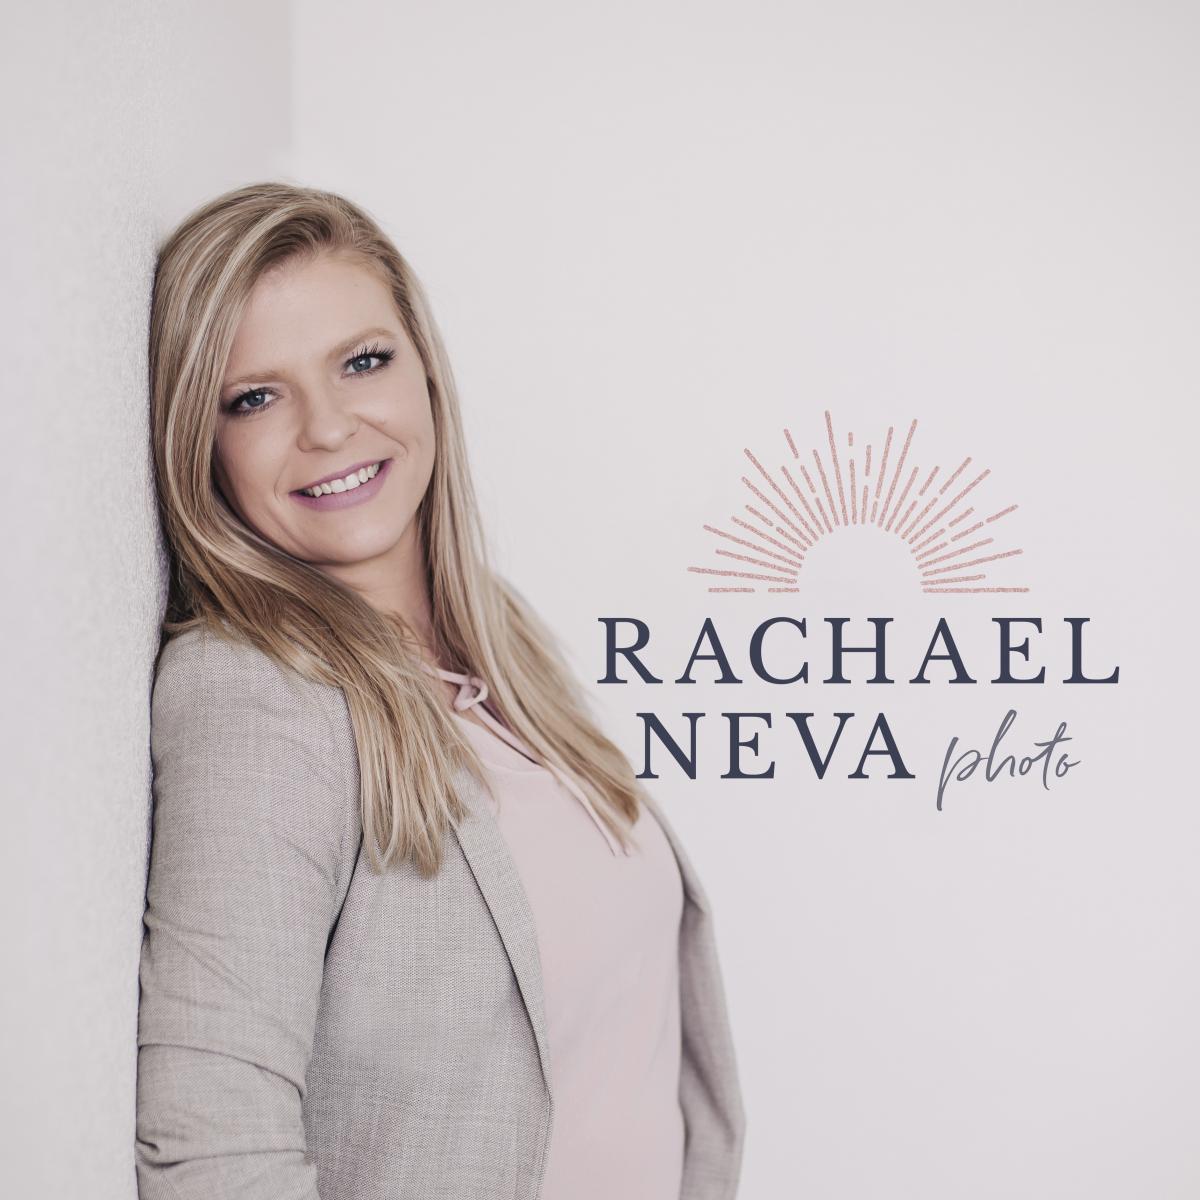 Rachael Neva User Profile